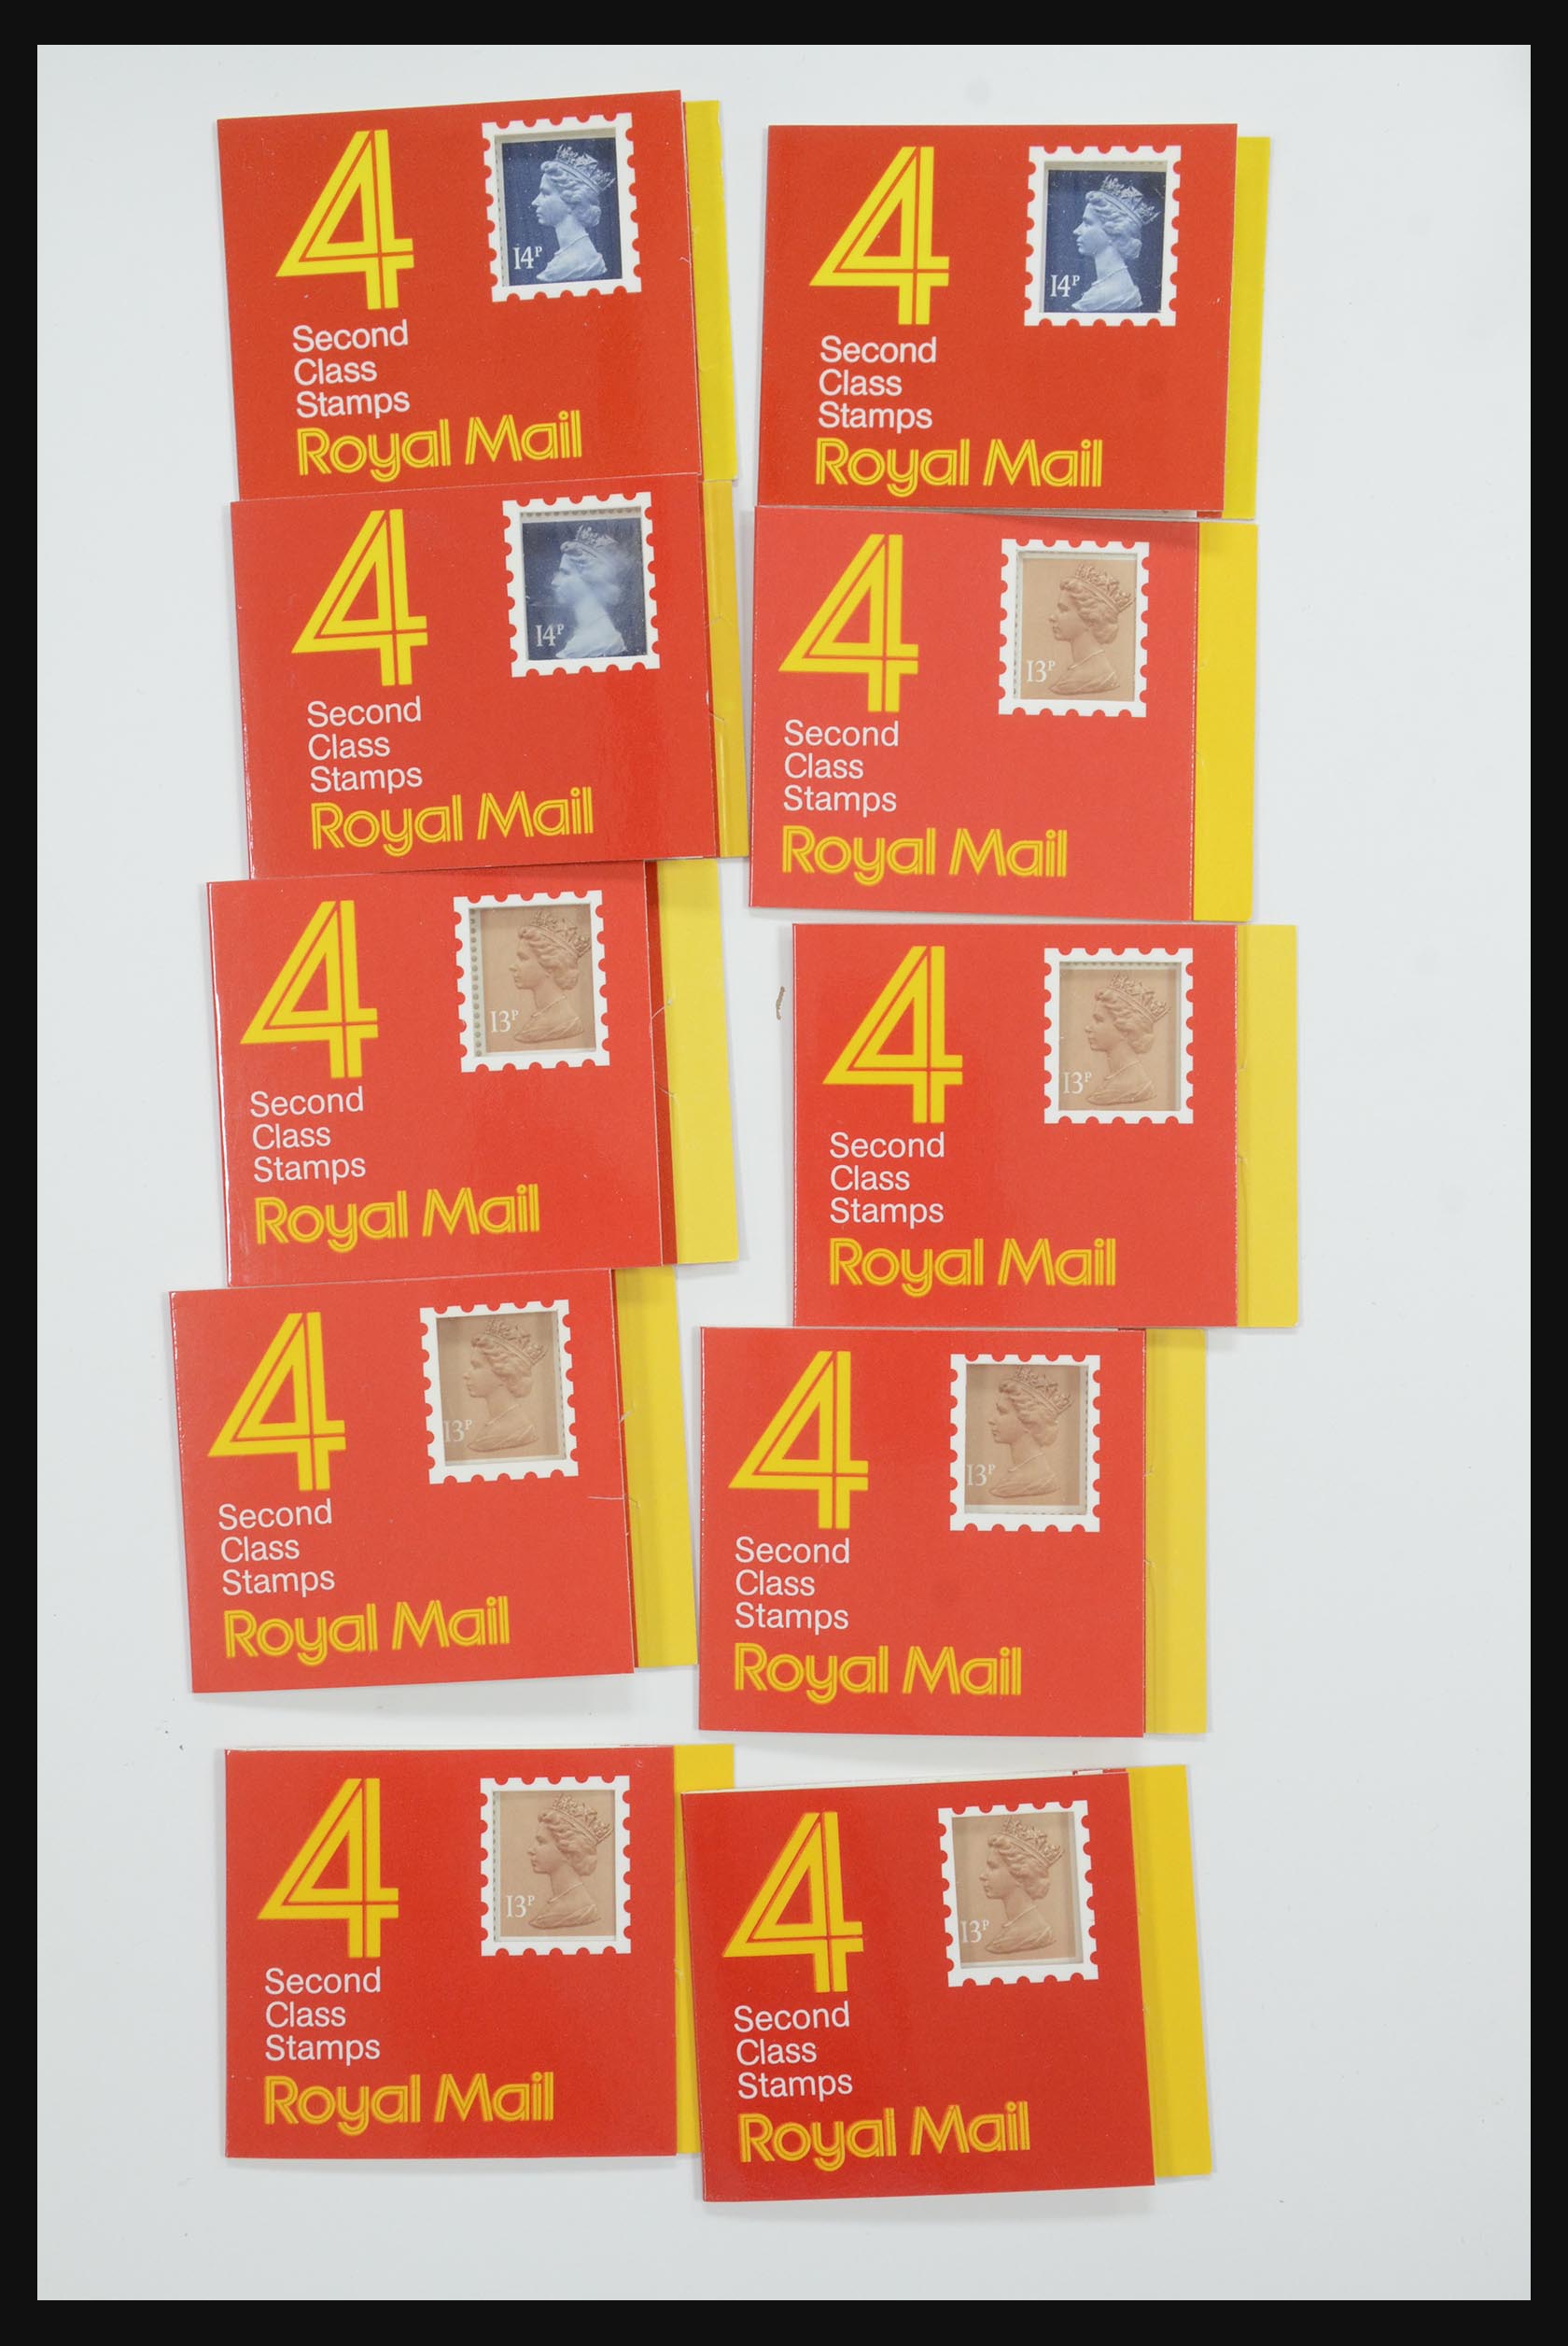 31961 058 - 31961 Great Britain stampbooklets 1971-1999.